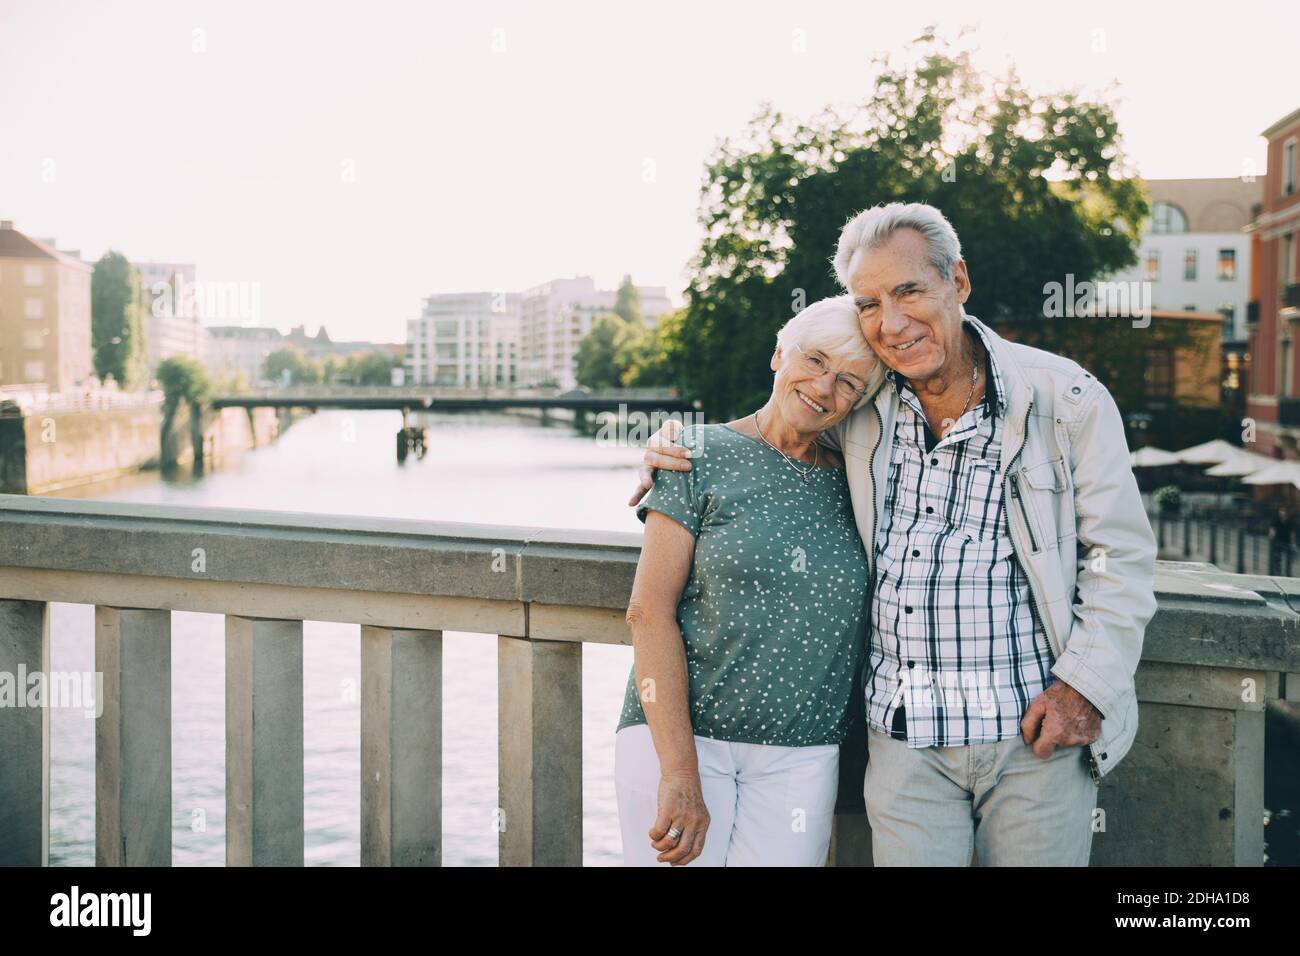 Portrait of smiling senior couple standing arm around against railing in city Stock Photo